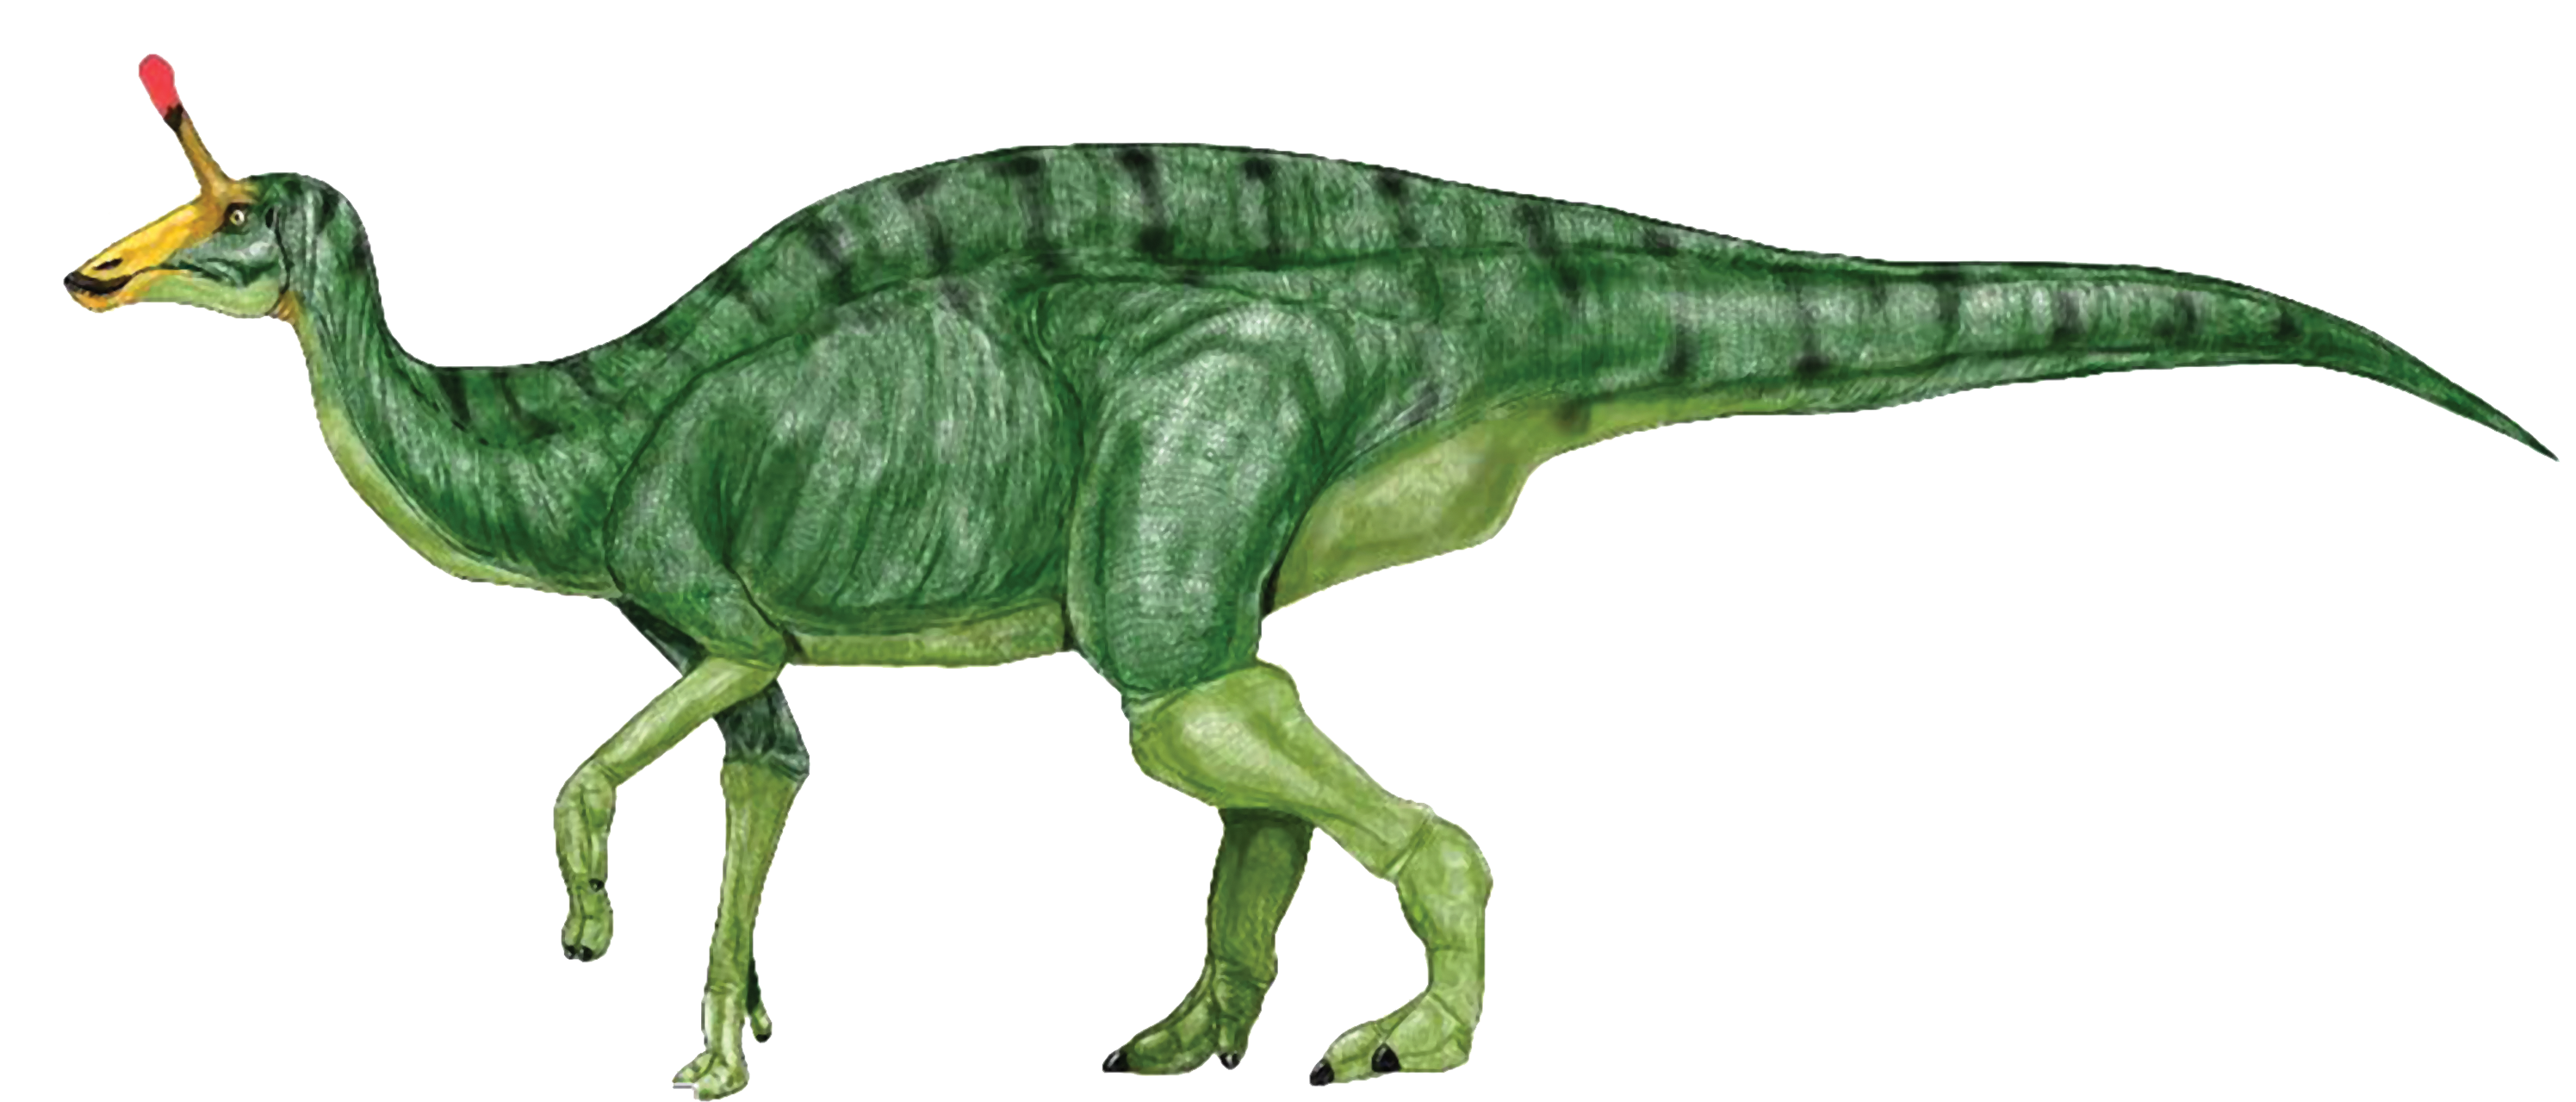 Green dinosaur clipart image 8